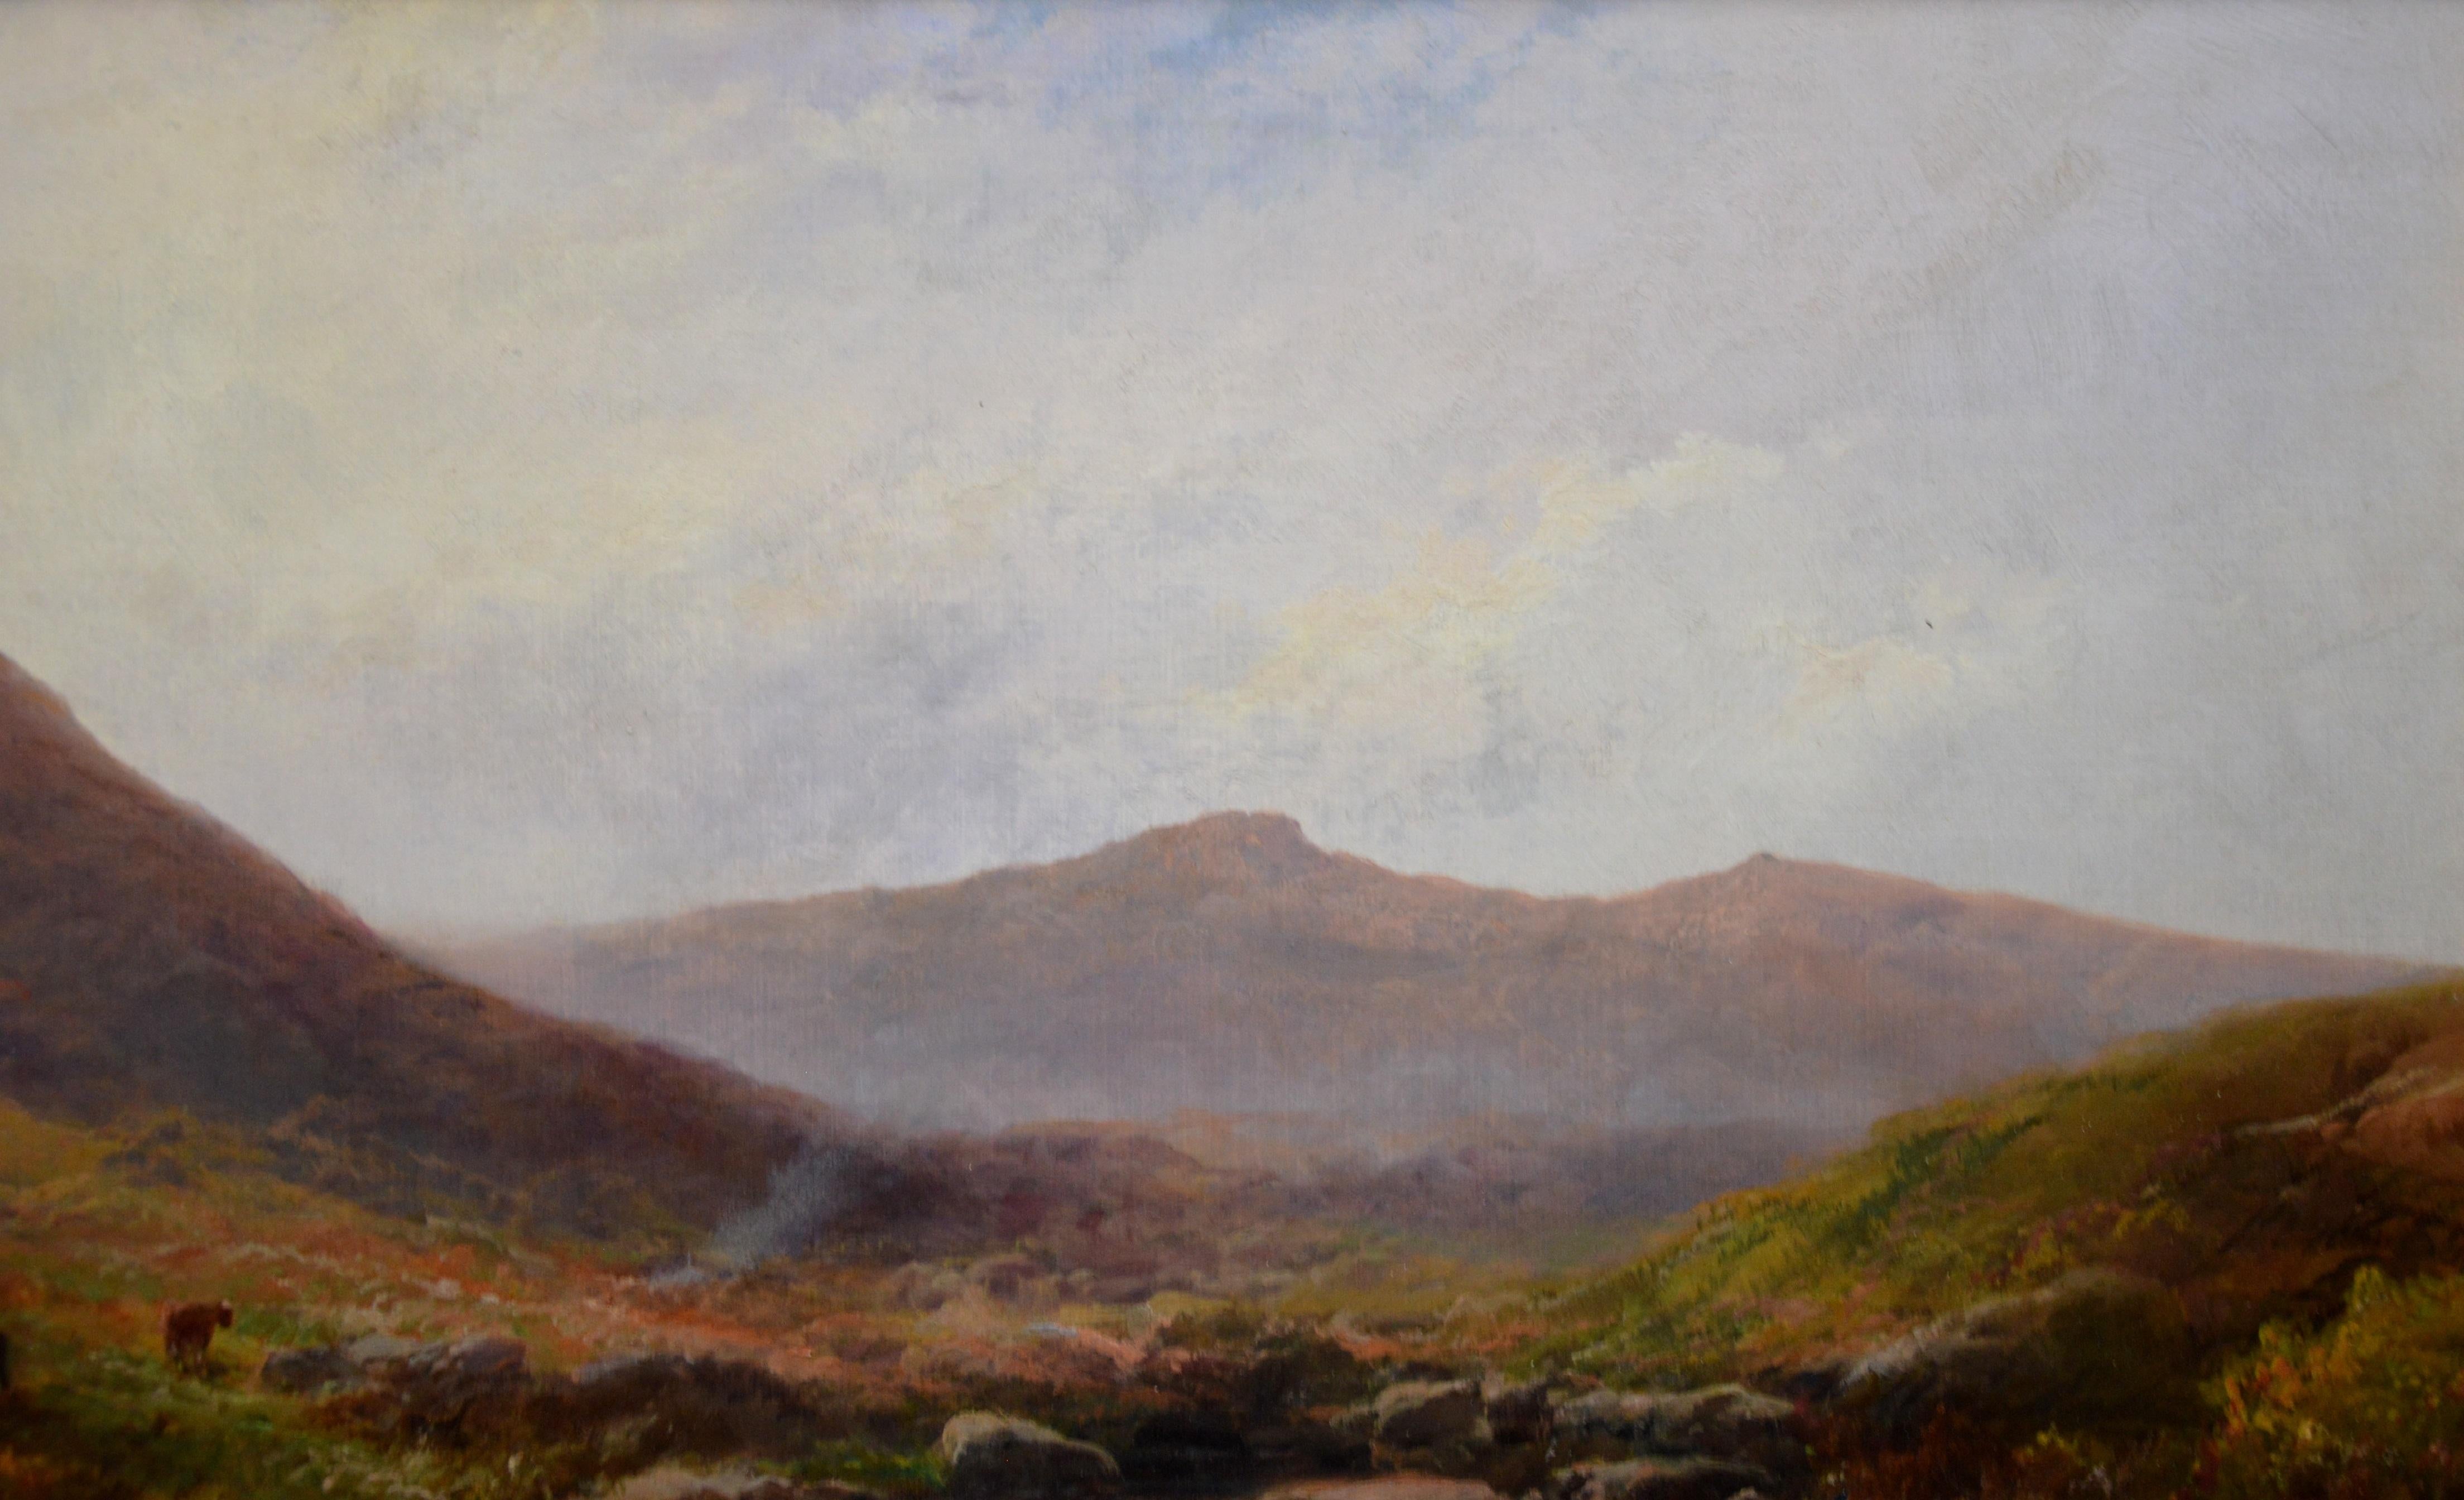 On the Tavy - 19th Century Landscape Oil Painting of Dartmoor Sherlock Holmes 3